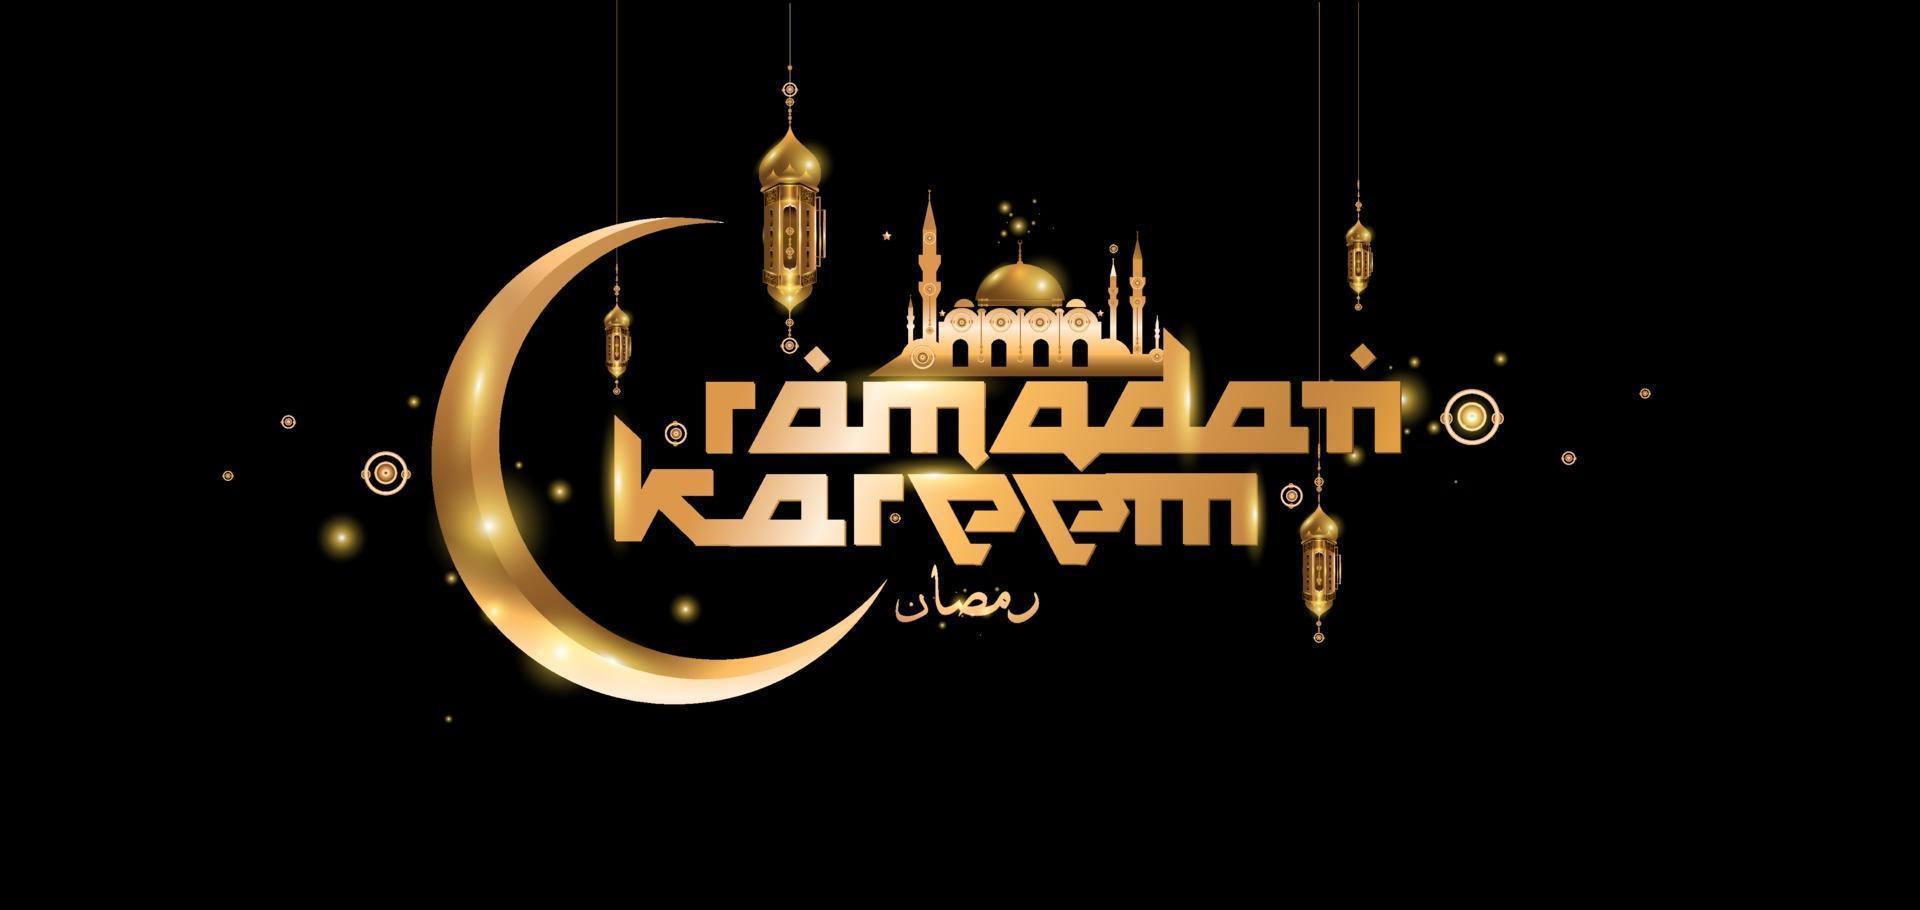 tarjeta de felicitación de la mezquita dorada islámica de ramadan kareem vector